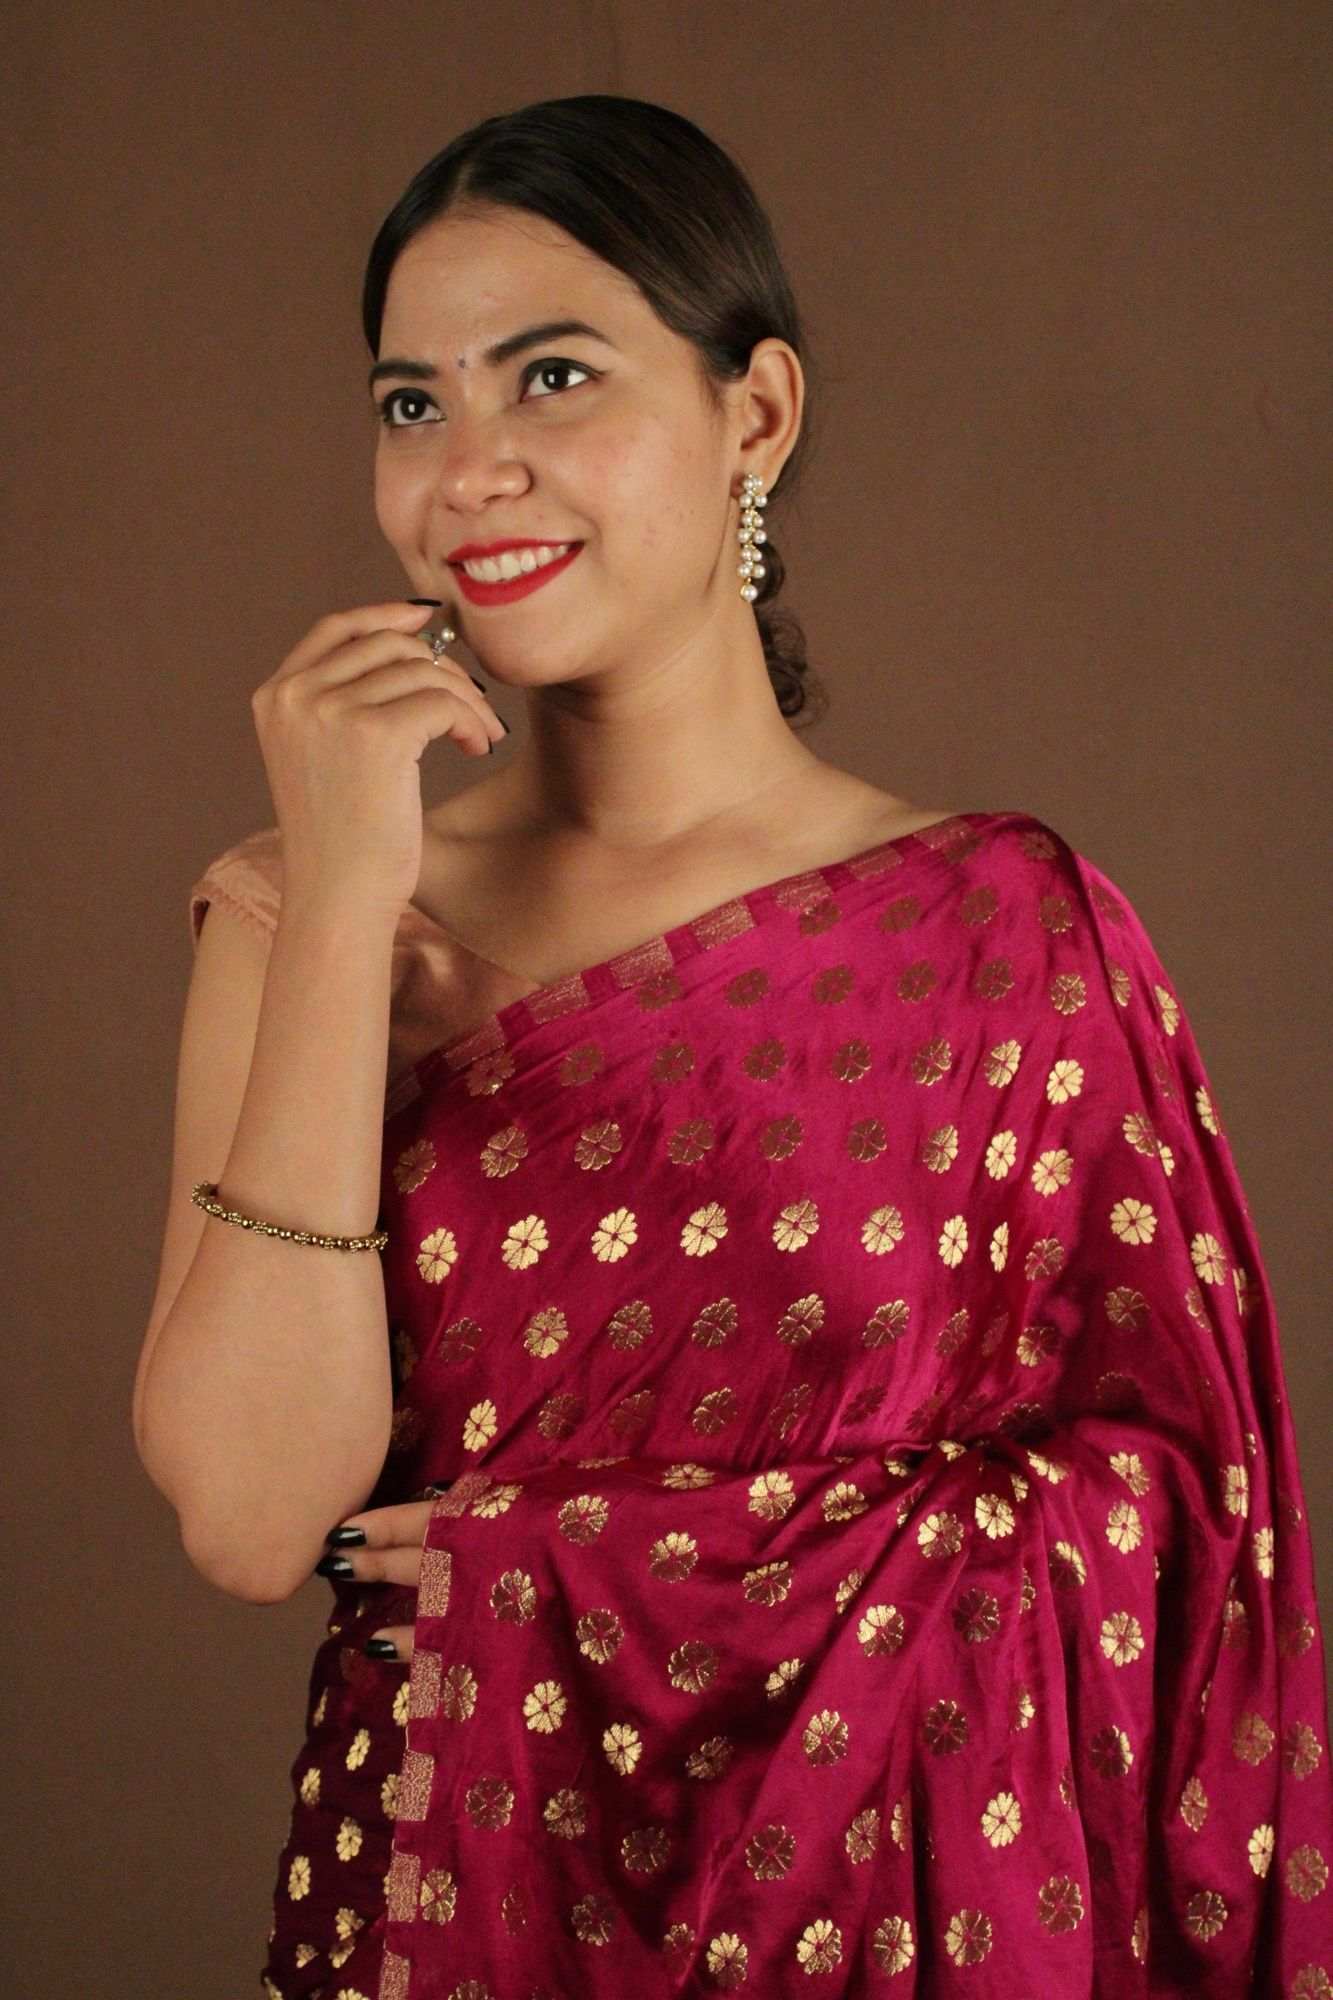 Readymade Saree Banarasi soft on skin banarasi brocade butis pallu designer Wrap in one minute sari with stitched blouse - Isadora Life Online Shopping Store